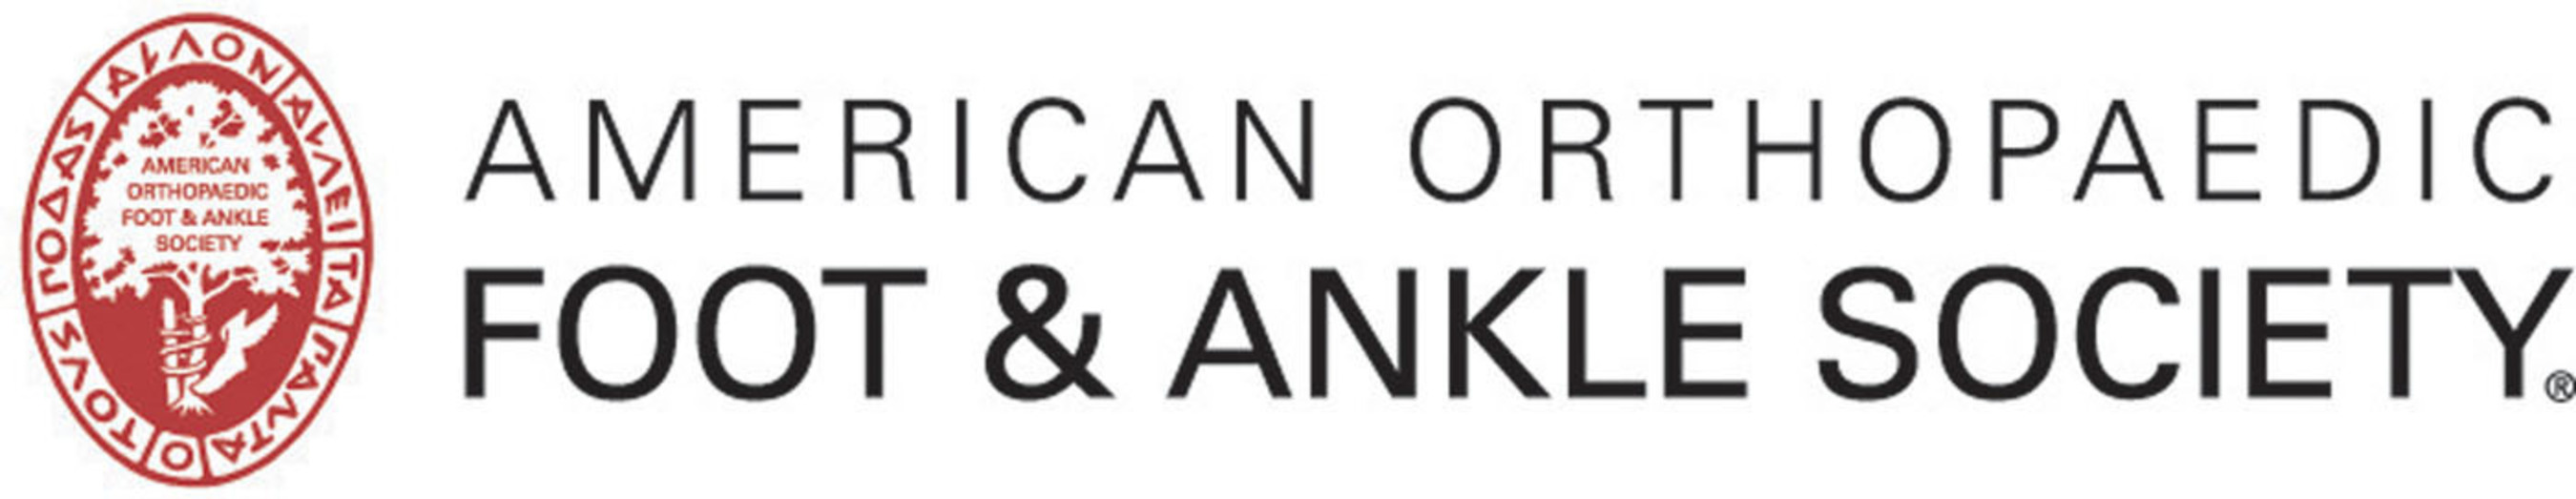 American Orthopaedic Foot & Ankle Society logo.